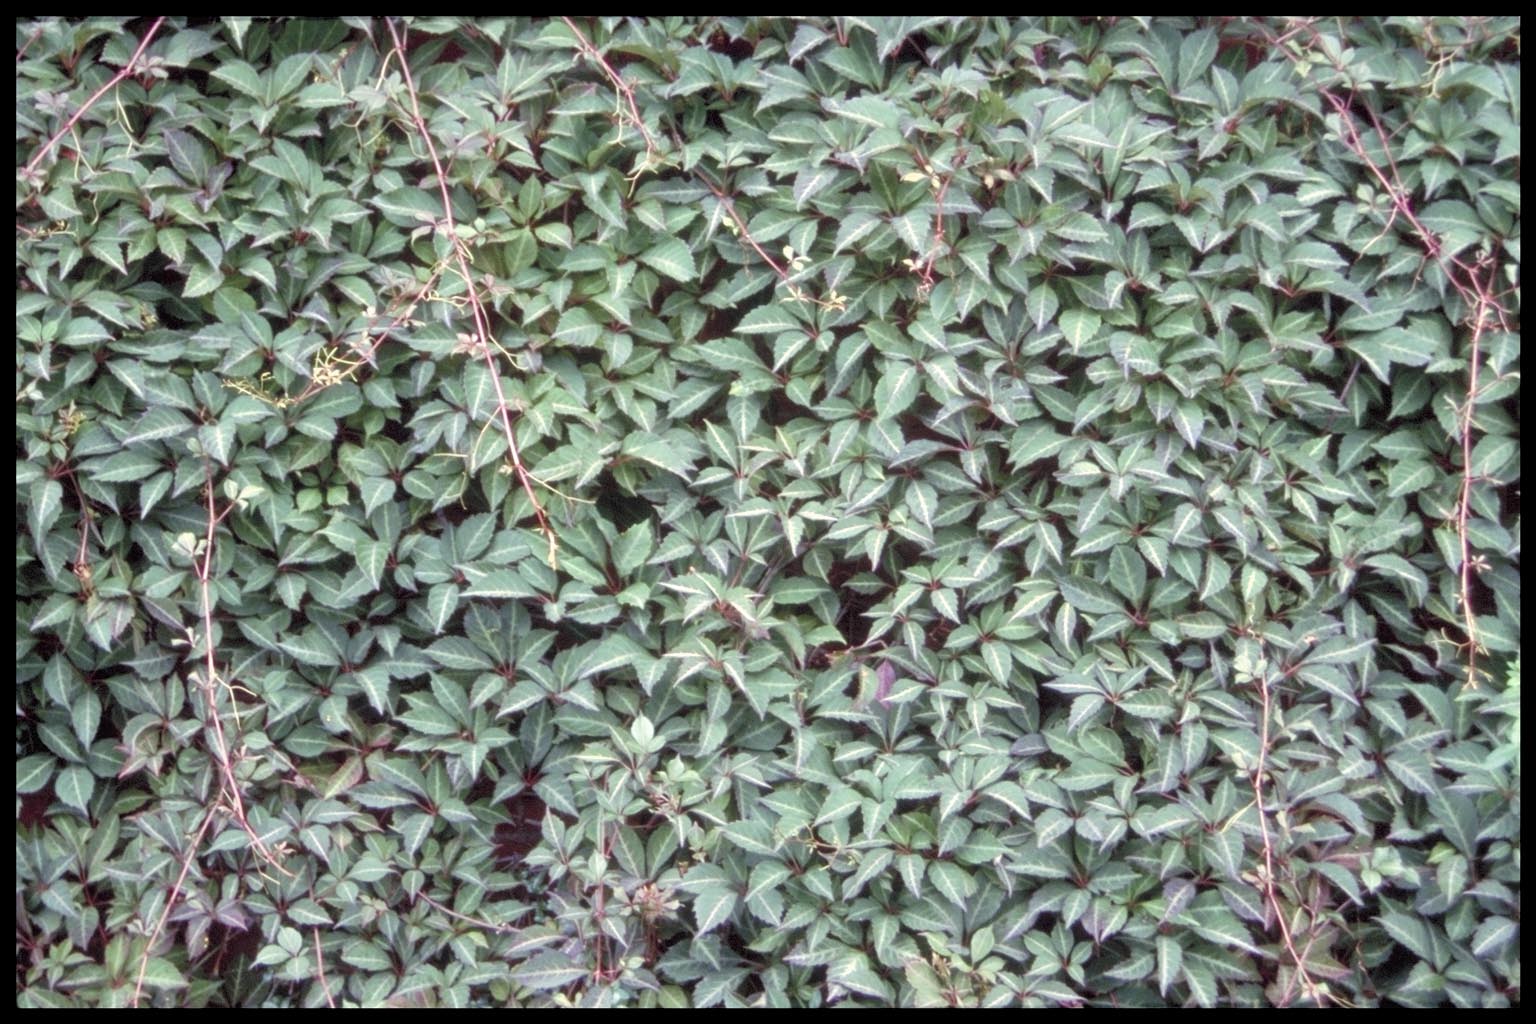 Parthenocissus henryi